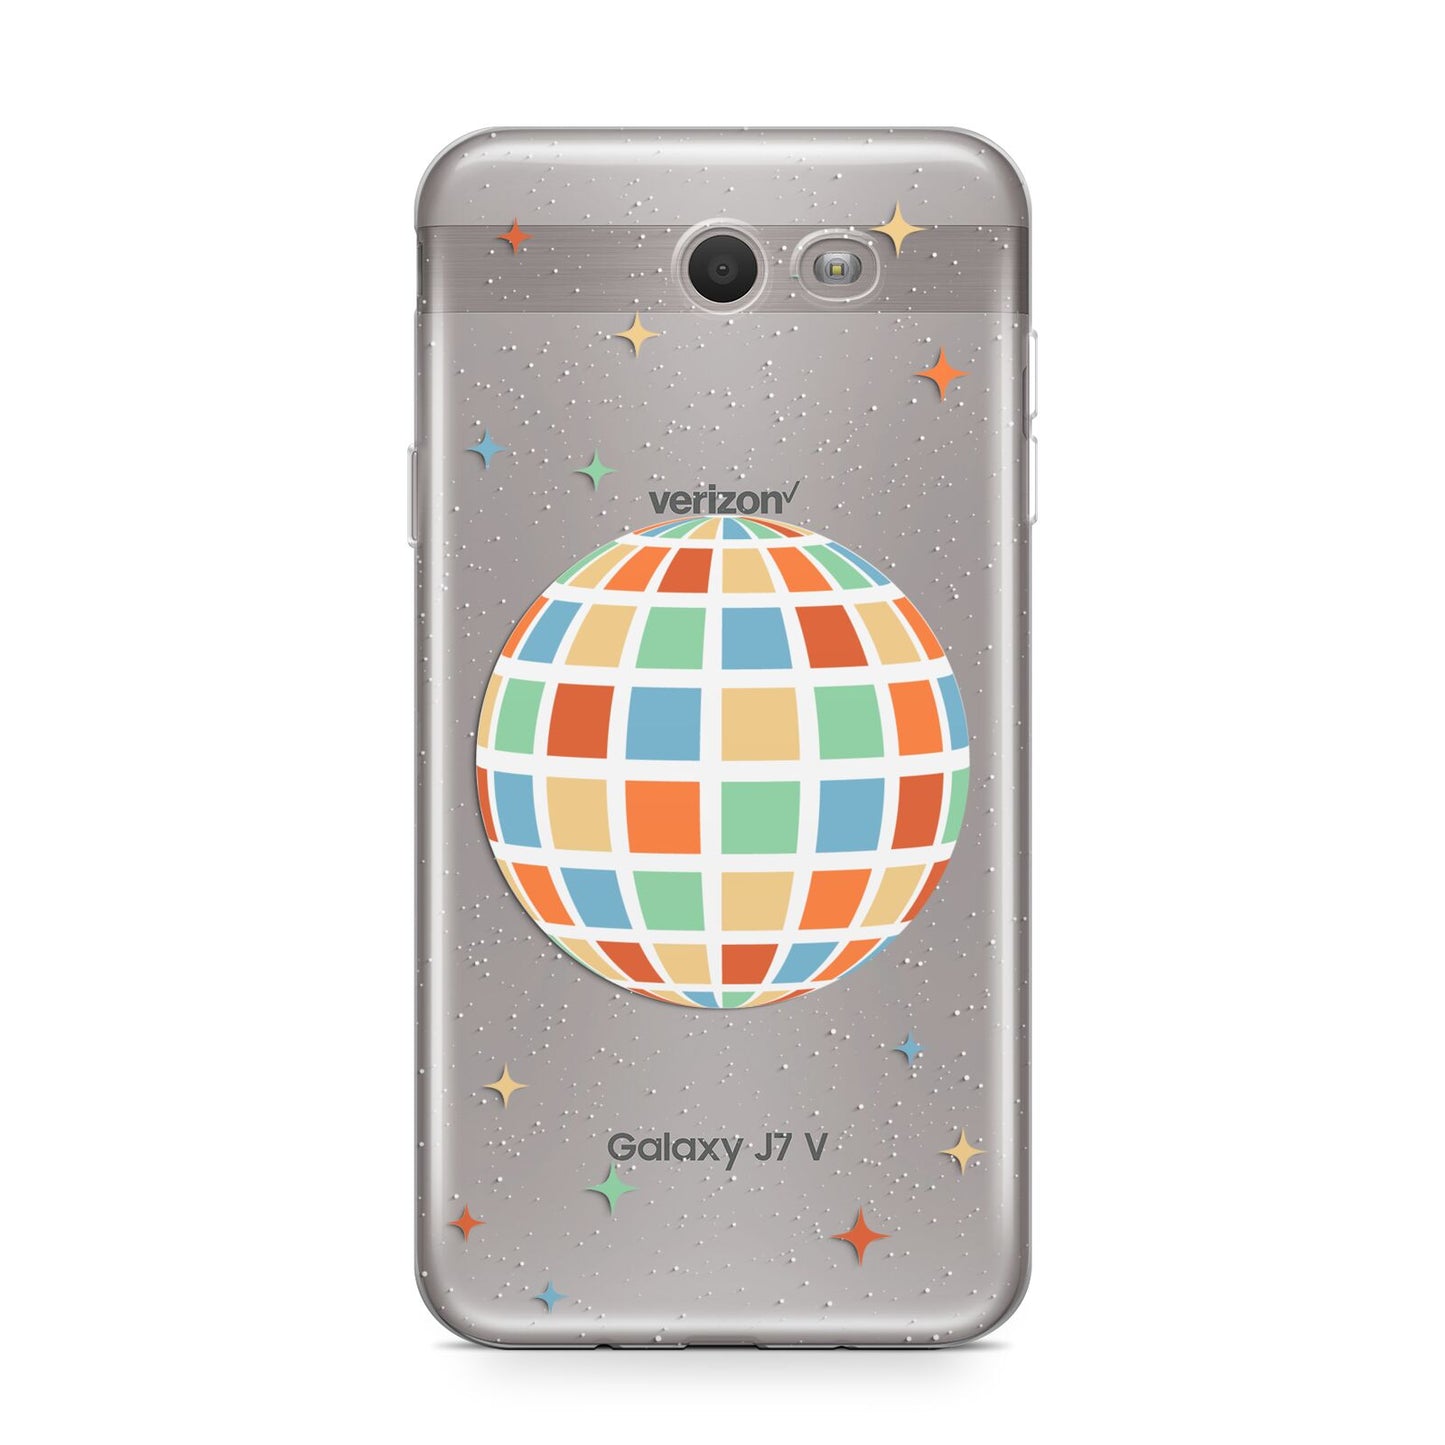 Disco Ball Samsung Galaxy J7 2017 Case